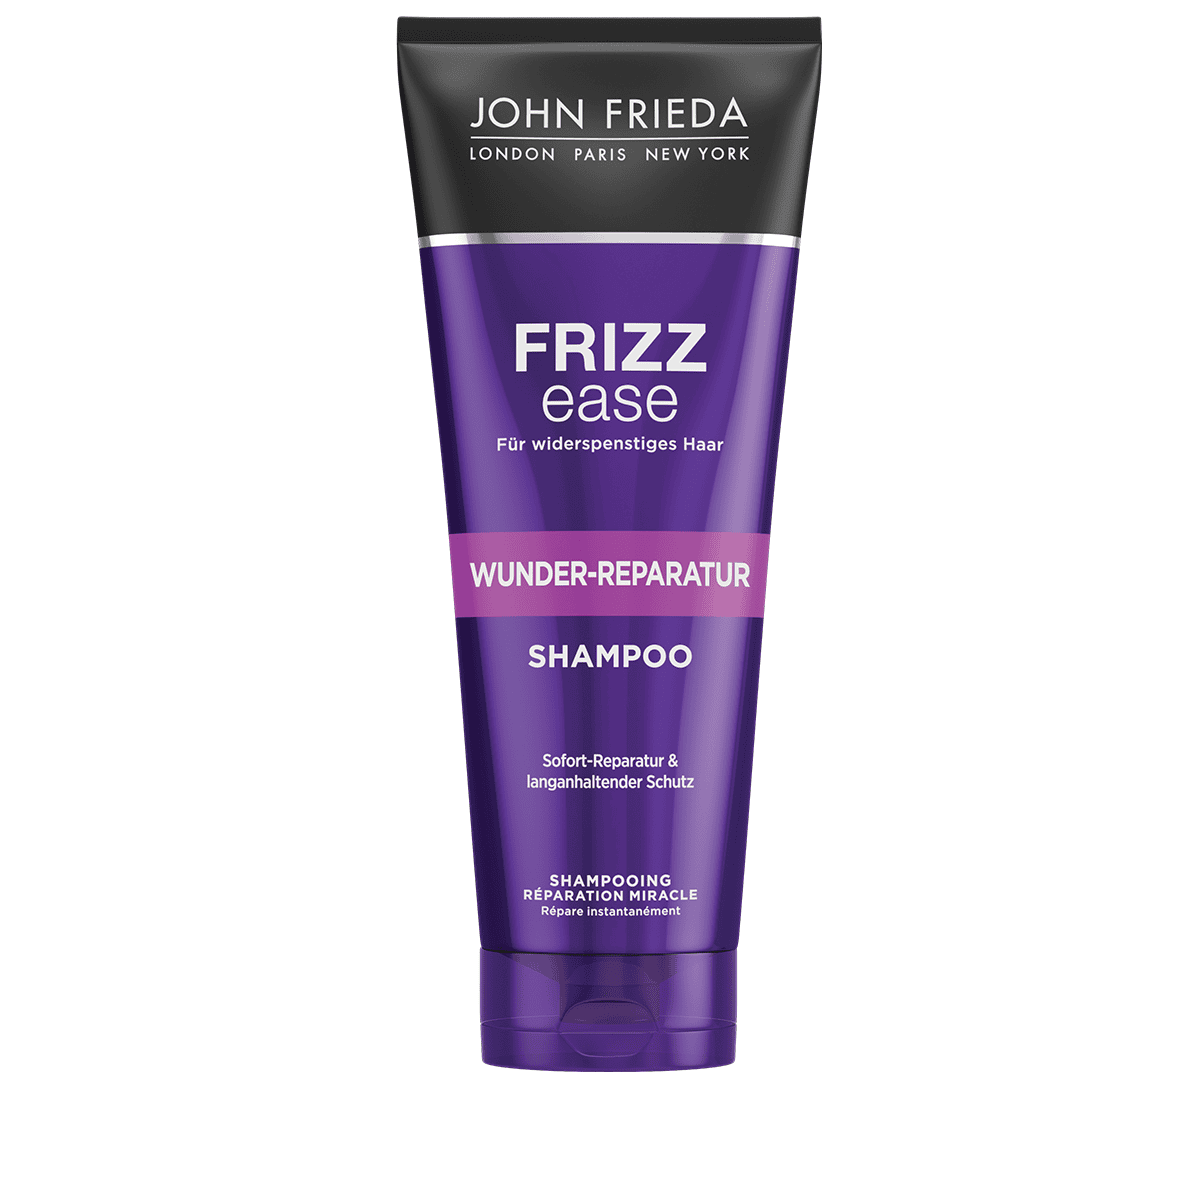 John Frieda Frizz Ease Wunder Reparatur Shampoo 250ml